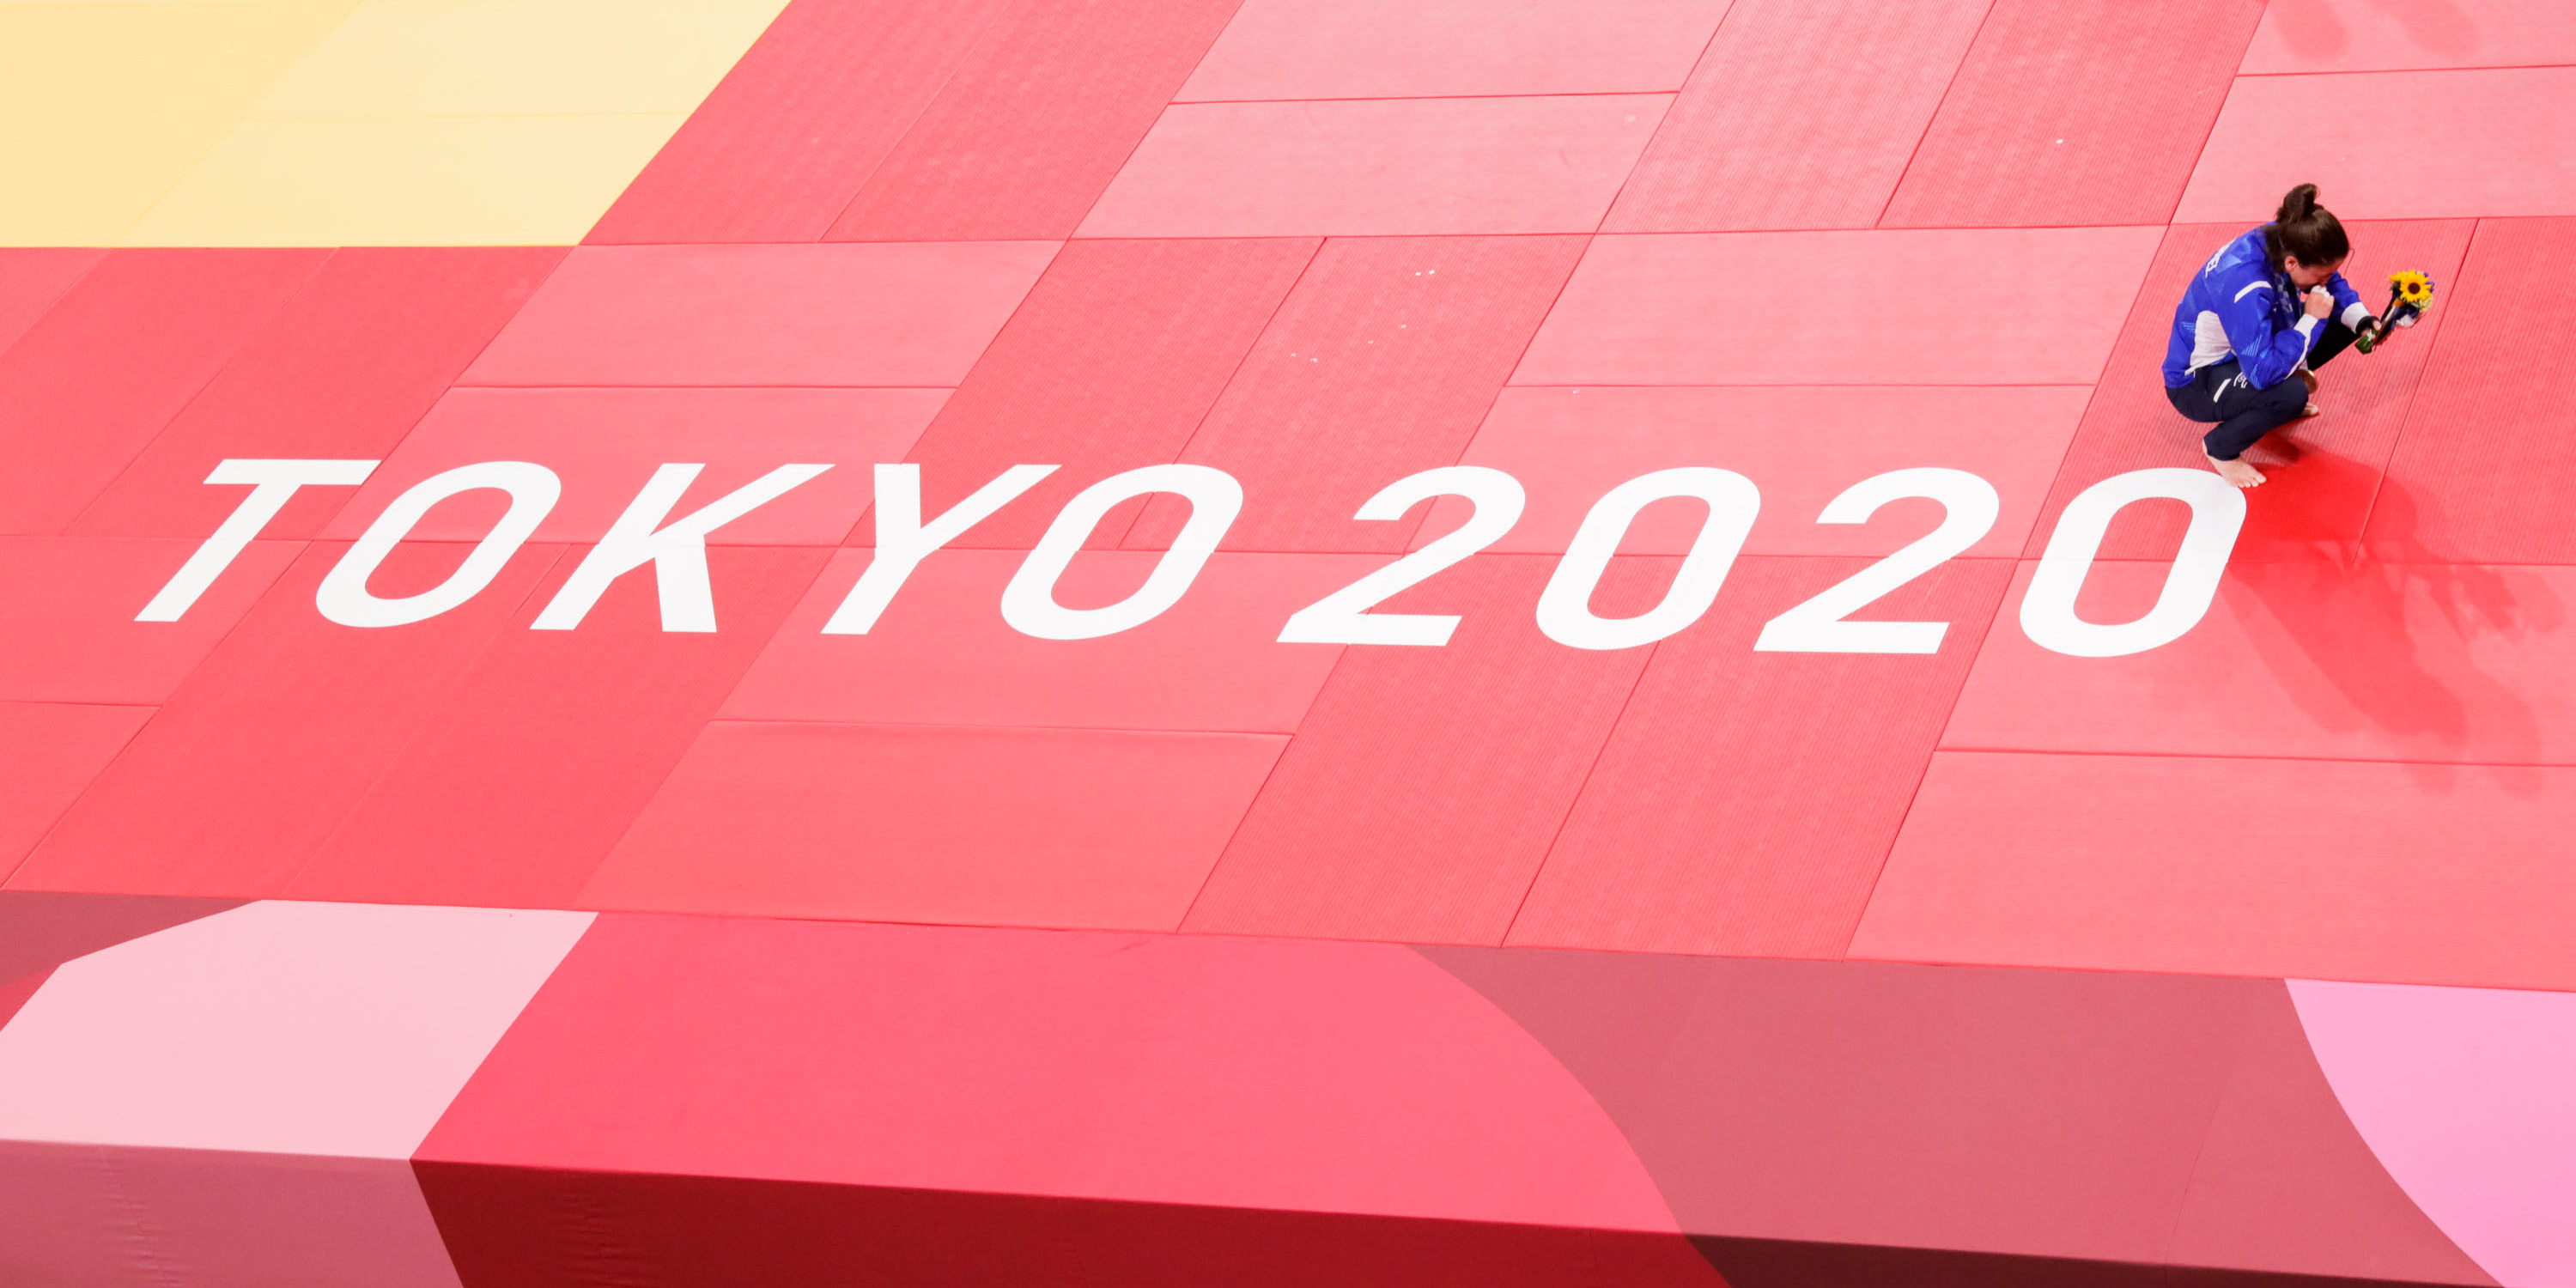 Avant-première: "Official Film of the Olympic Games Tokyo 2020" de Naomi Kawase